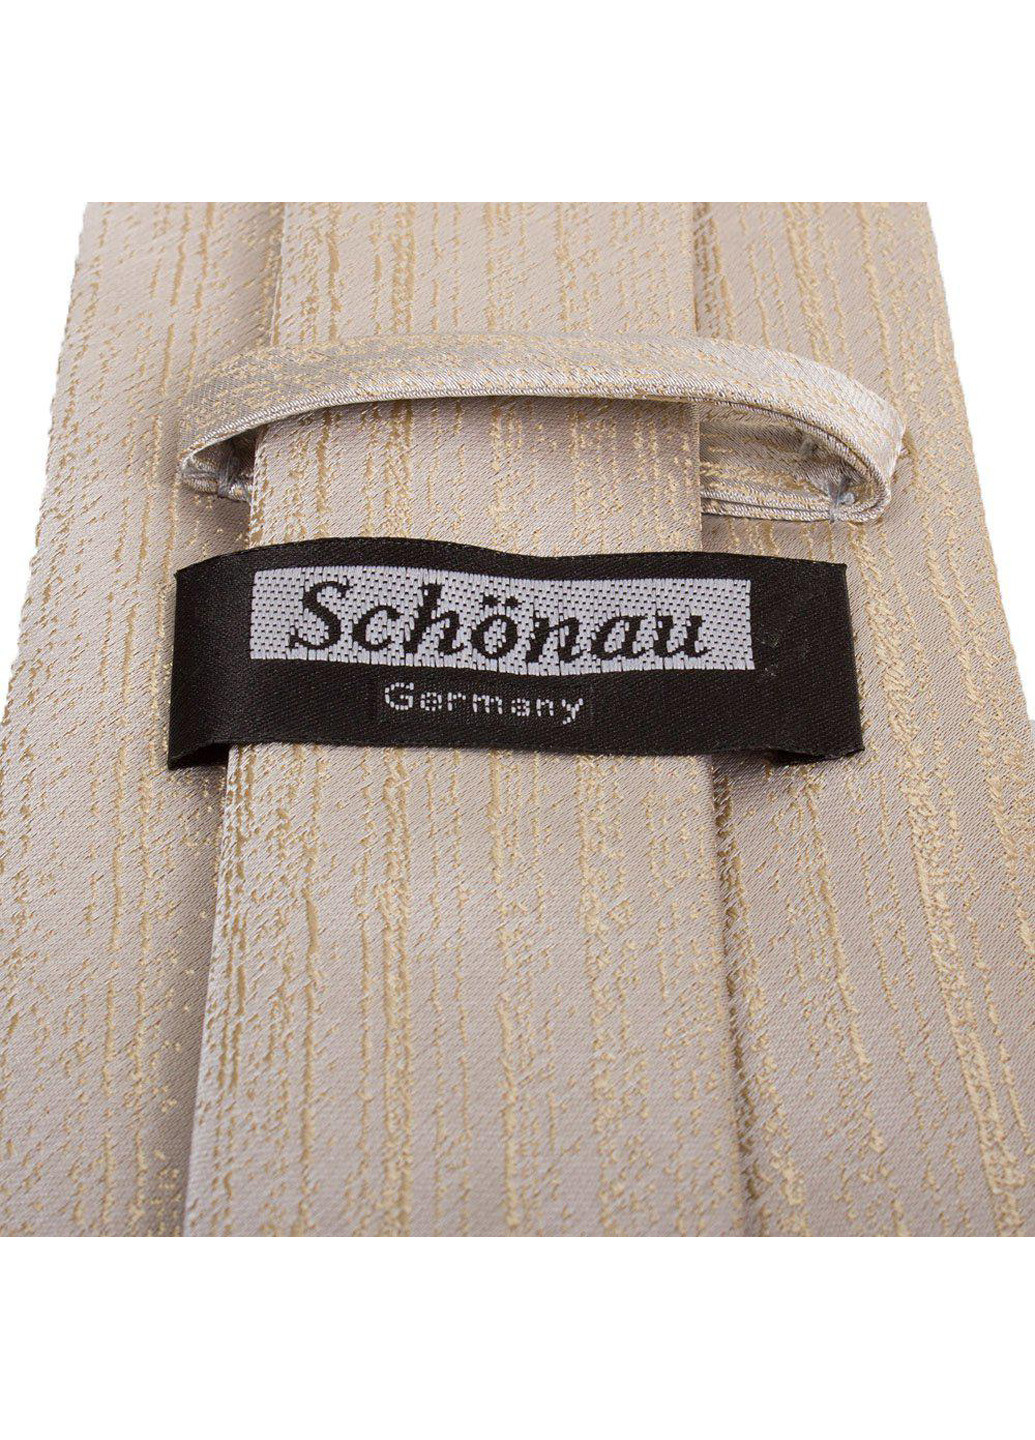 Мужской галстук 147 см Schonau & Houcken (195547754)